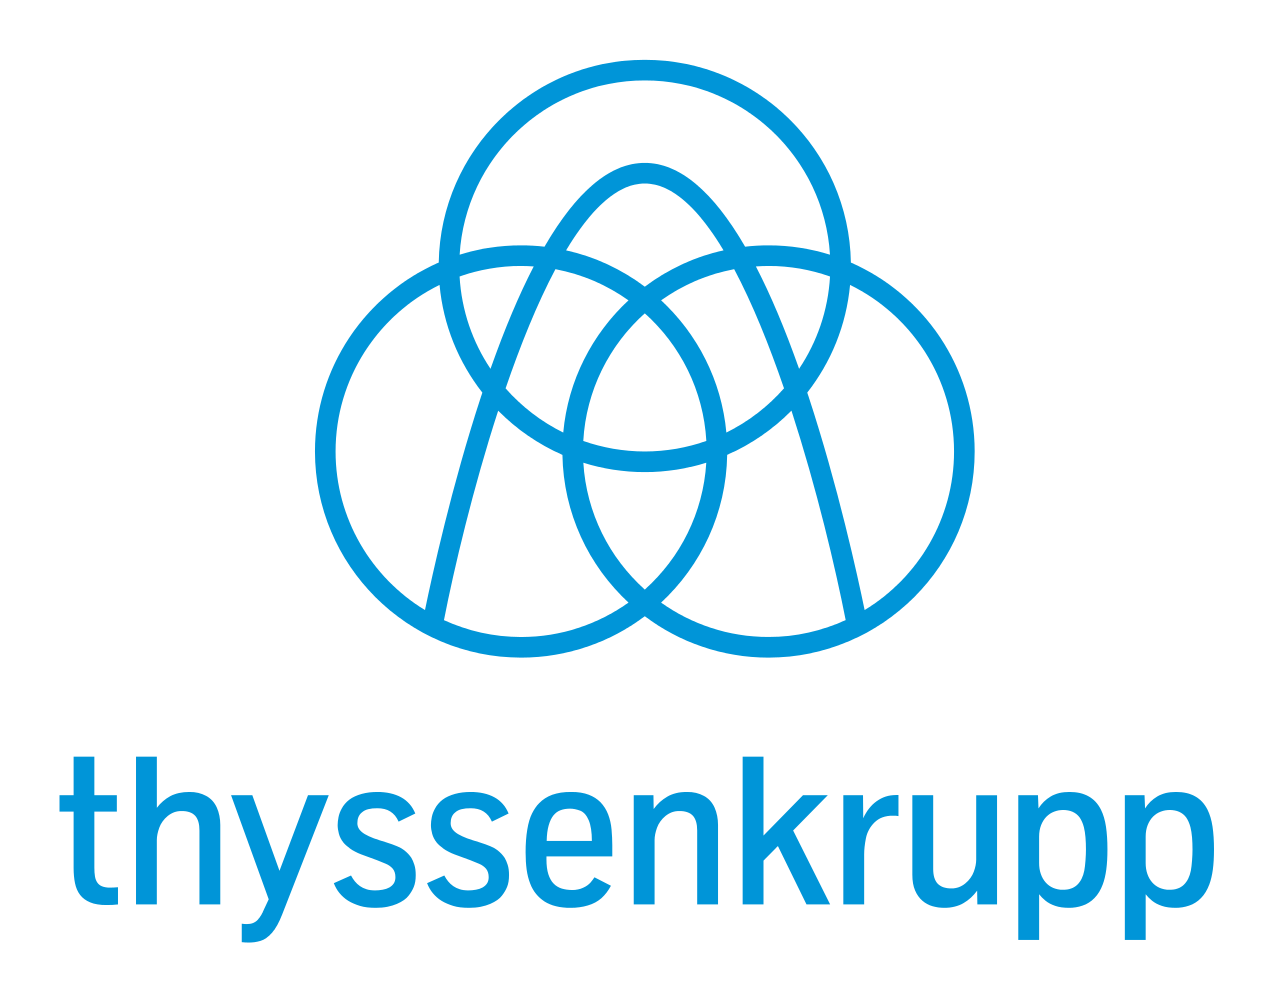 Thyssenkrupp ransomware attack